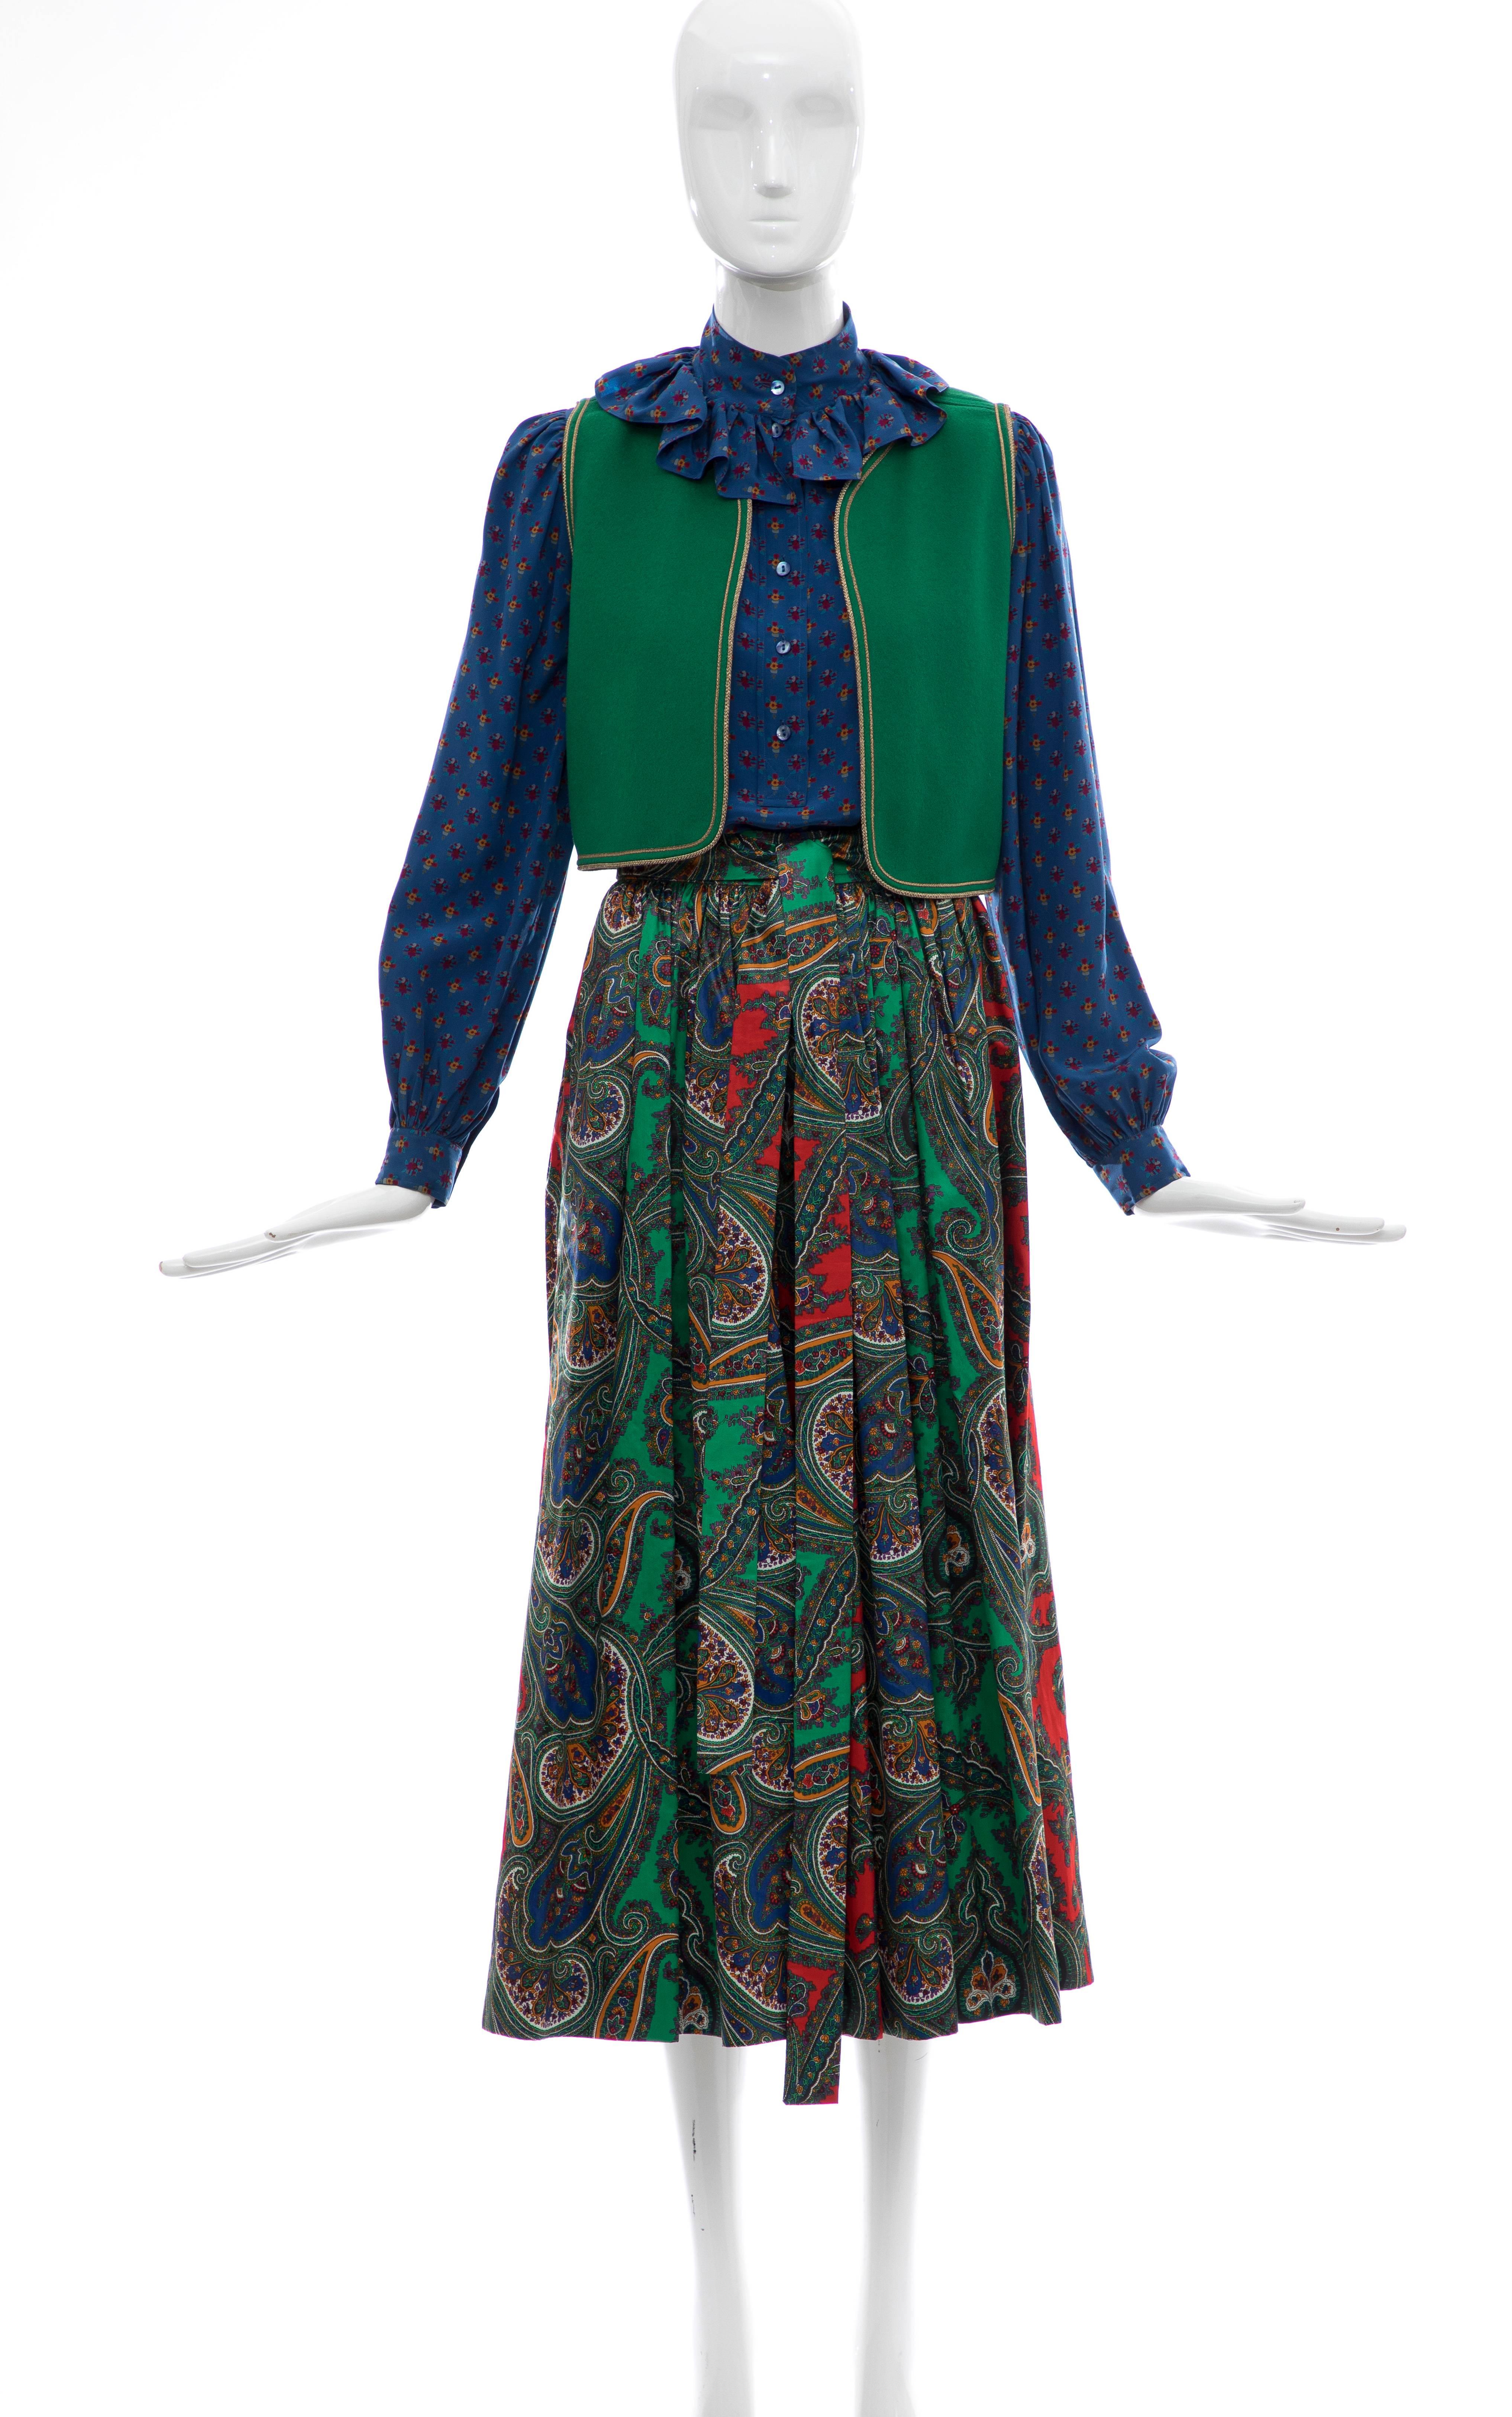 Yves Saint Laurent Rive Gauche, circa 1970s silk printed blouse, wool felted green vest, paisley print cotton sateen skirt  with one left side pocket skirt-suit.

Blouse: EU. 36, Bust 36, Length 23.5, Shoulders 14.5

Skirt: Eu. 34, Waist 22, Length